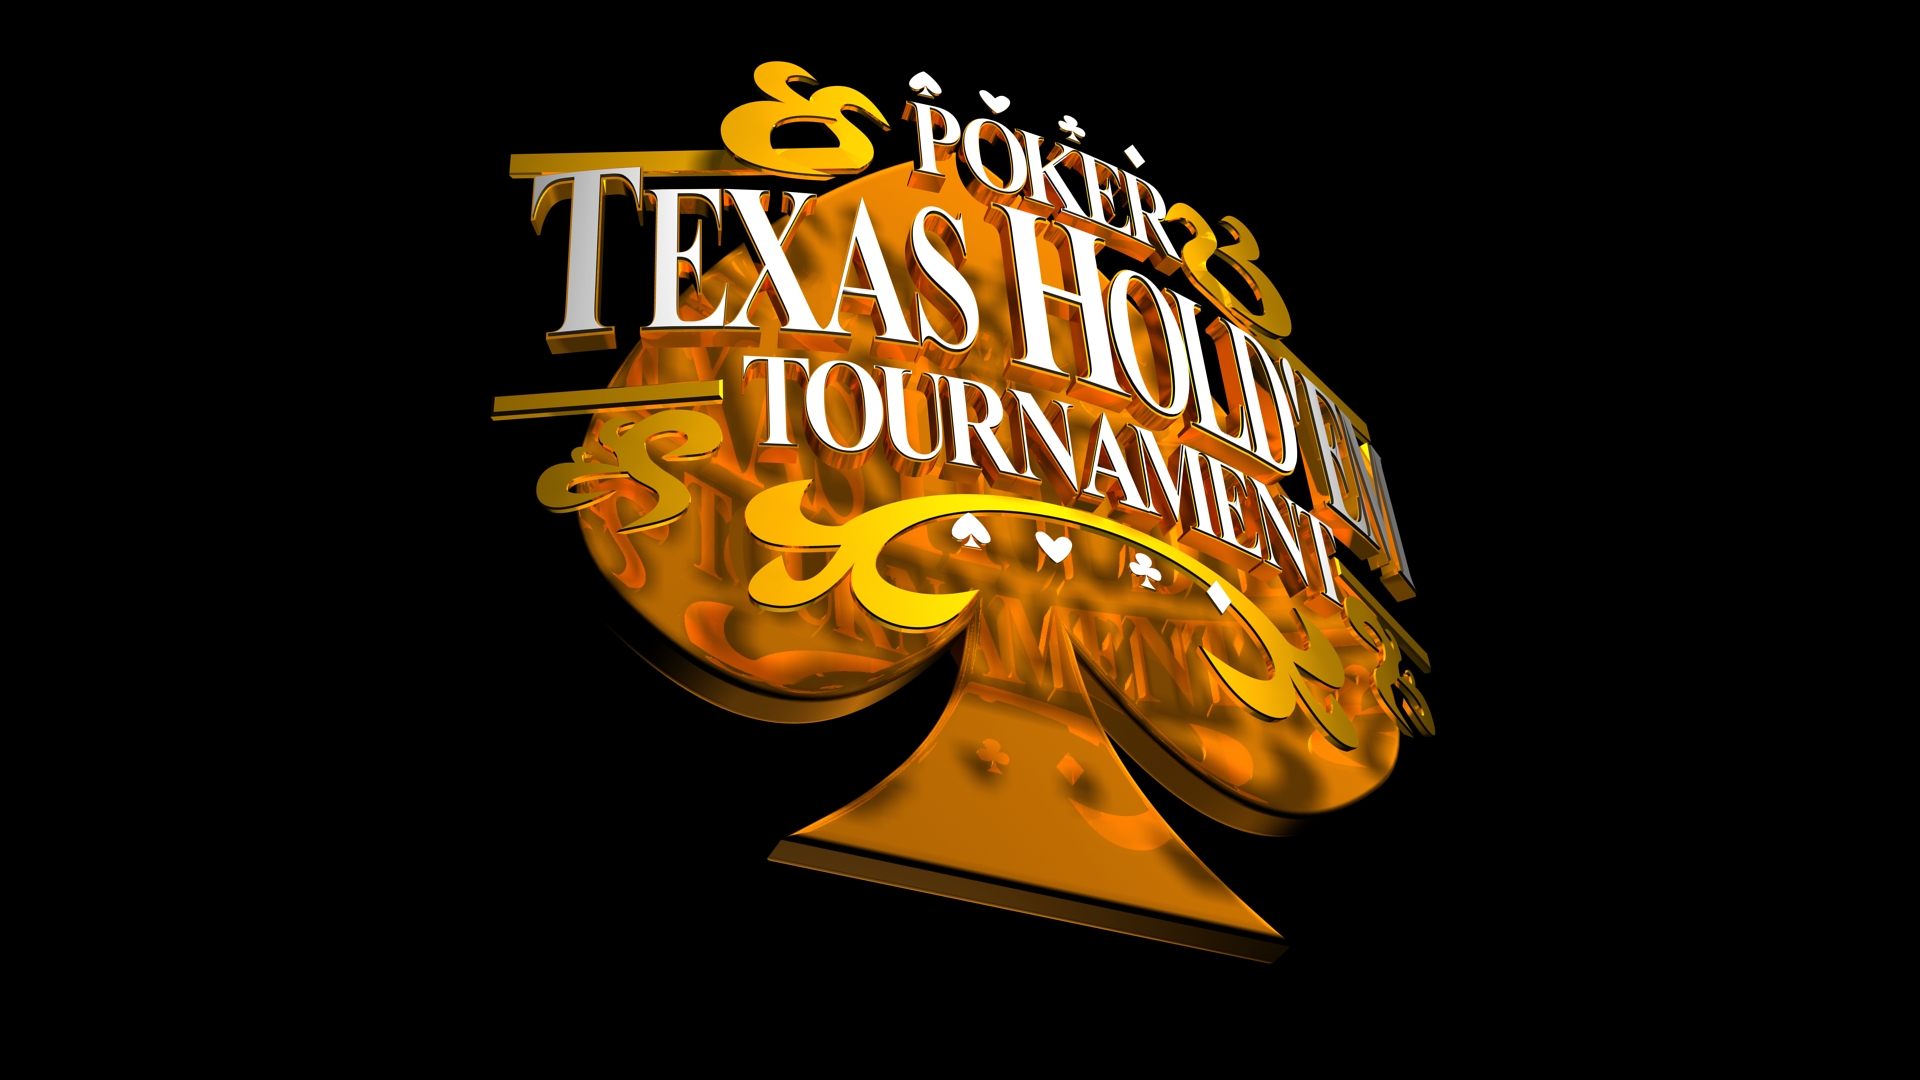 Texas Holdem by ~mclaren1141 on deviantART